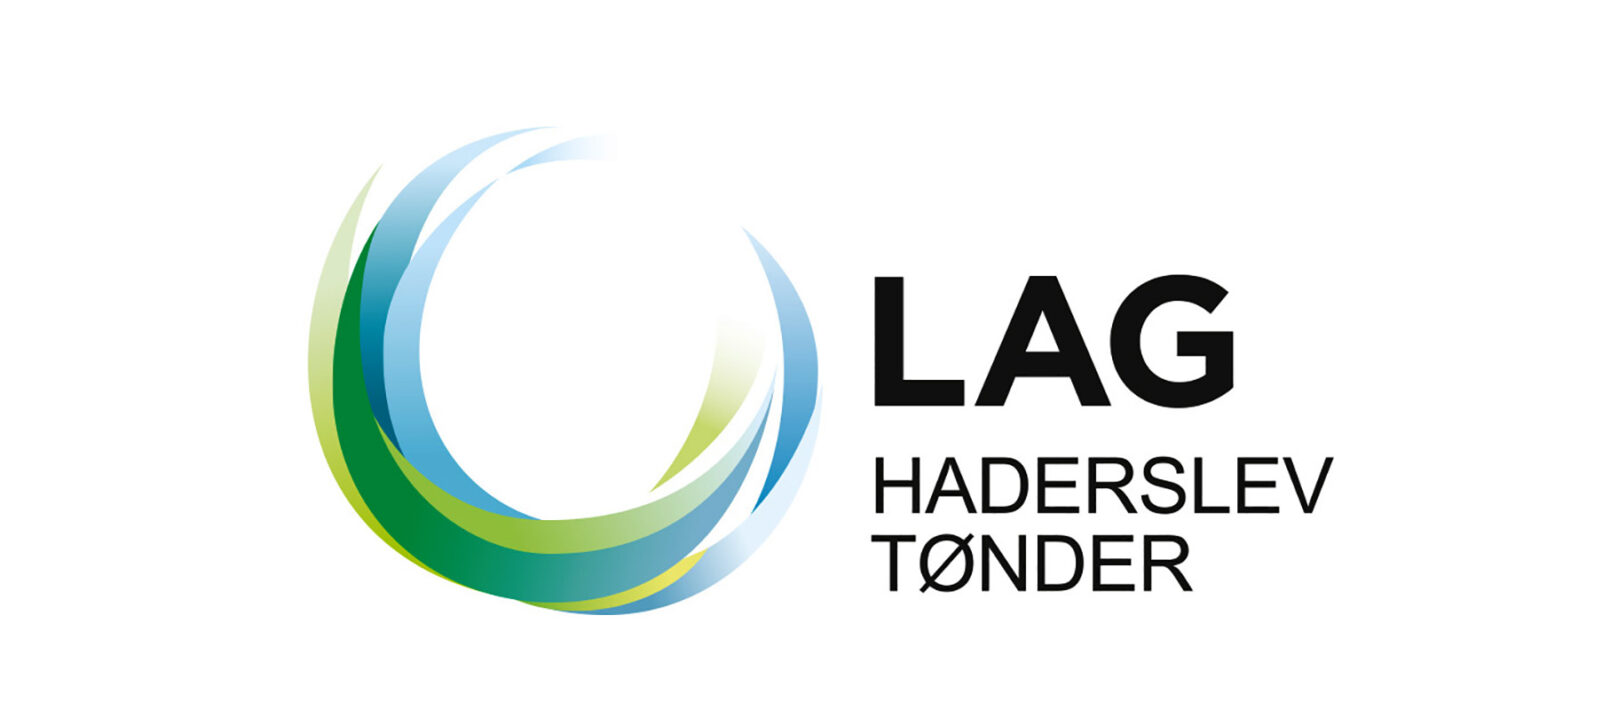 LAG, Haderslev & Tønder logo